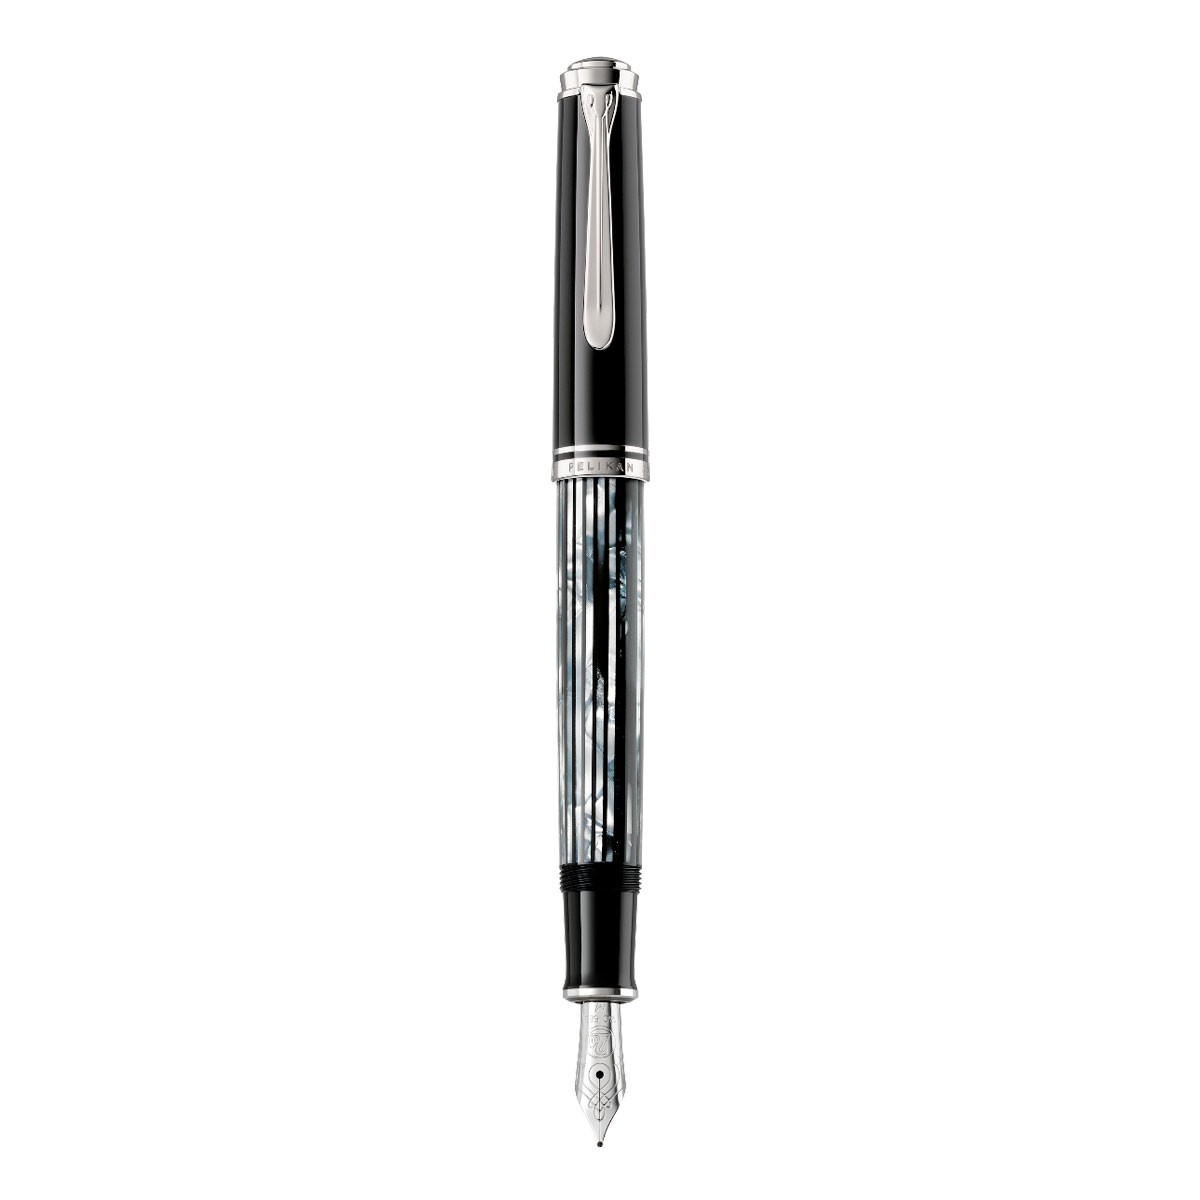 Penna Stilografica Pen Of The Year 2020 Black Edition,-Vertecchi Penne